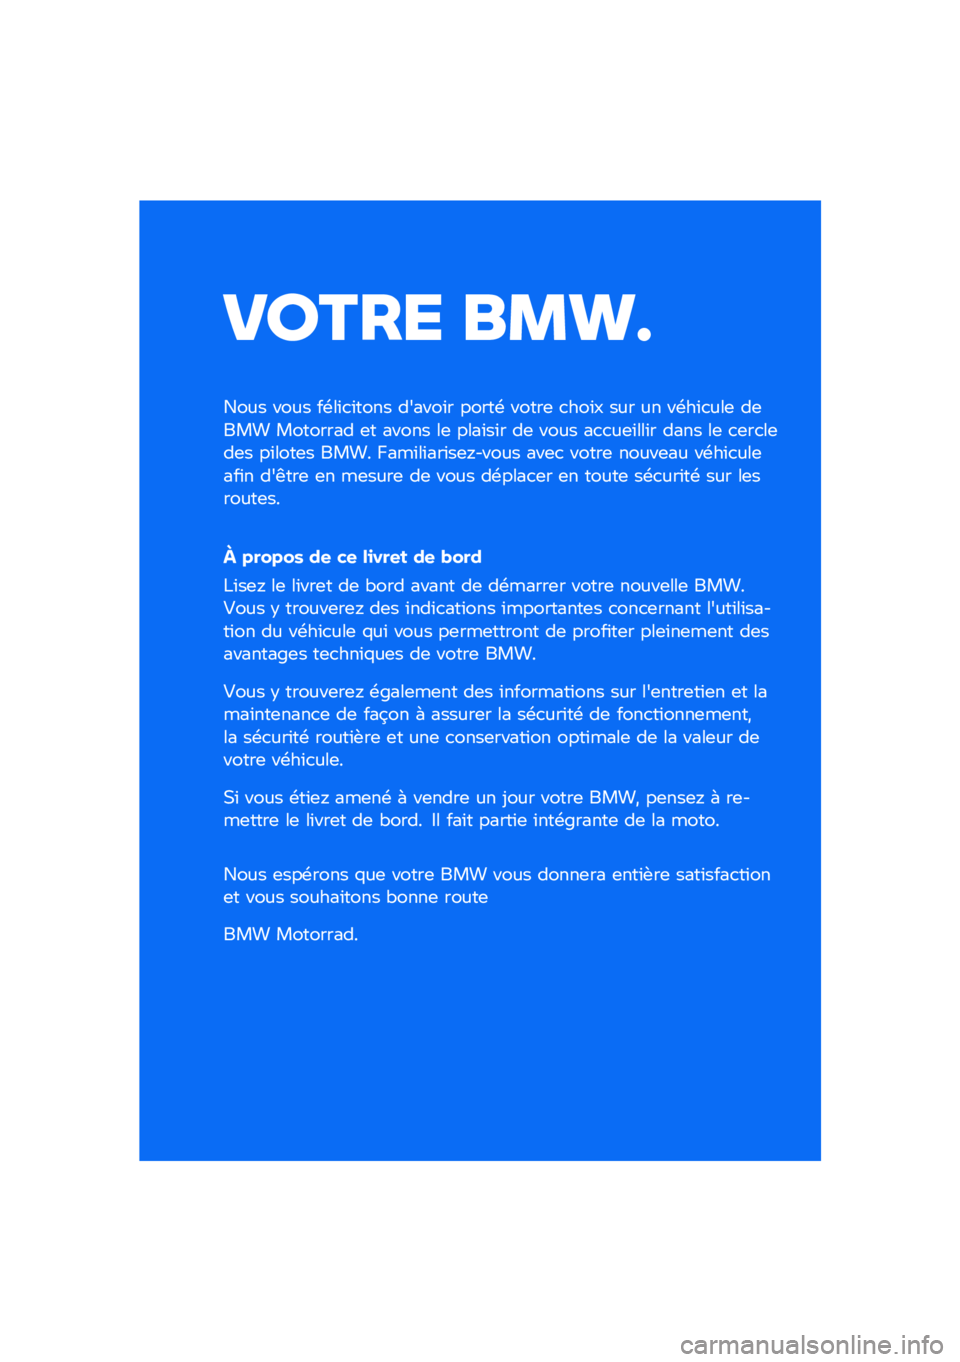 BMW MOTORRAD F 900 R 2021  Livret de bord (in French) ����� ��\b�	�

���� ���� ��\b��\f�
�\f���� ������\f� �����\b �����	 �
���\f� ��� �� ��\b��\f�
���	 ��	��� �������� �	� ����� ��	 ���